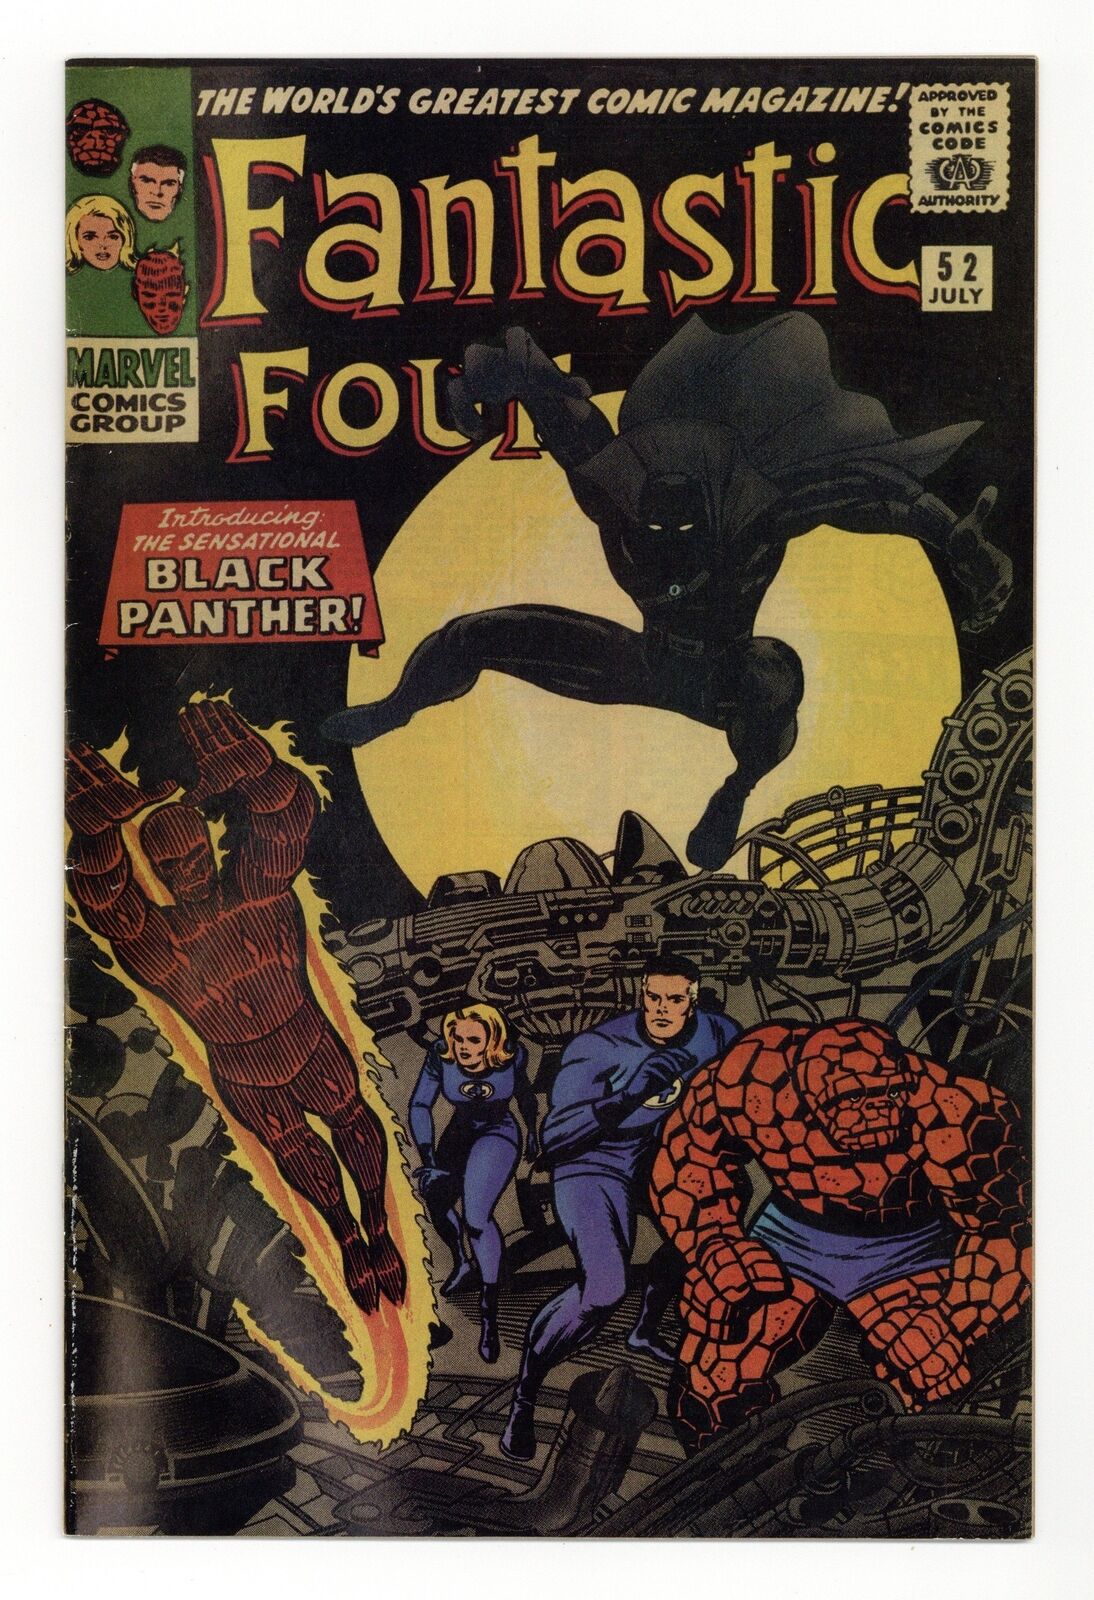 Marvel\'s Greatest Comics Fantastic Four #52 FN 6.0 2006